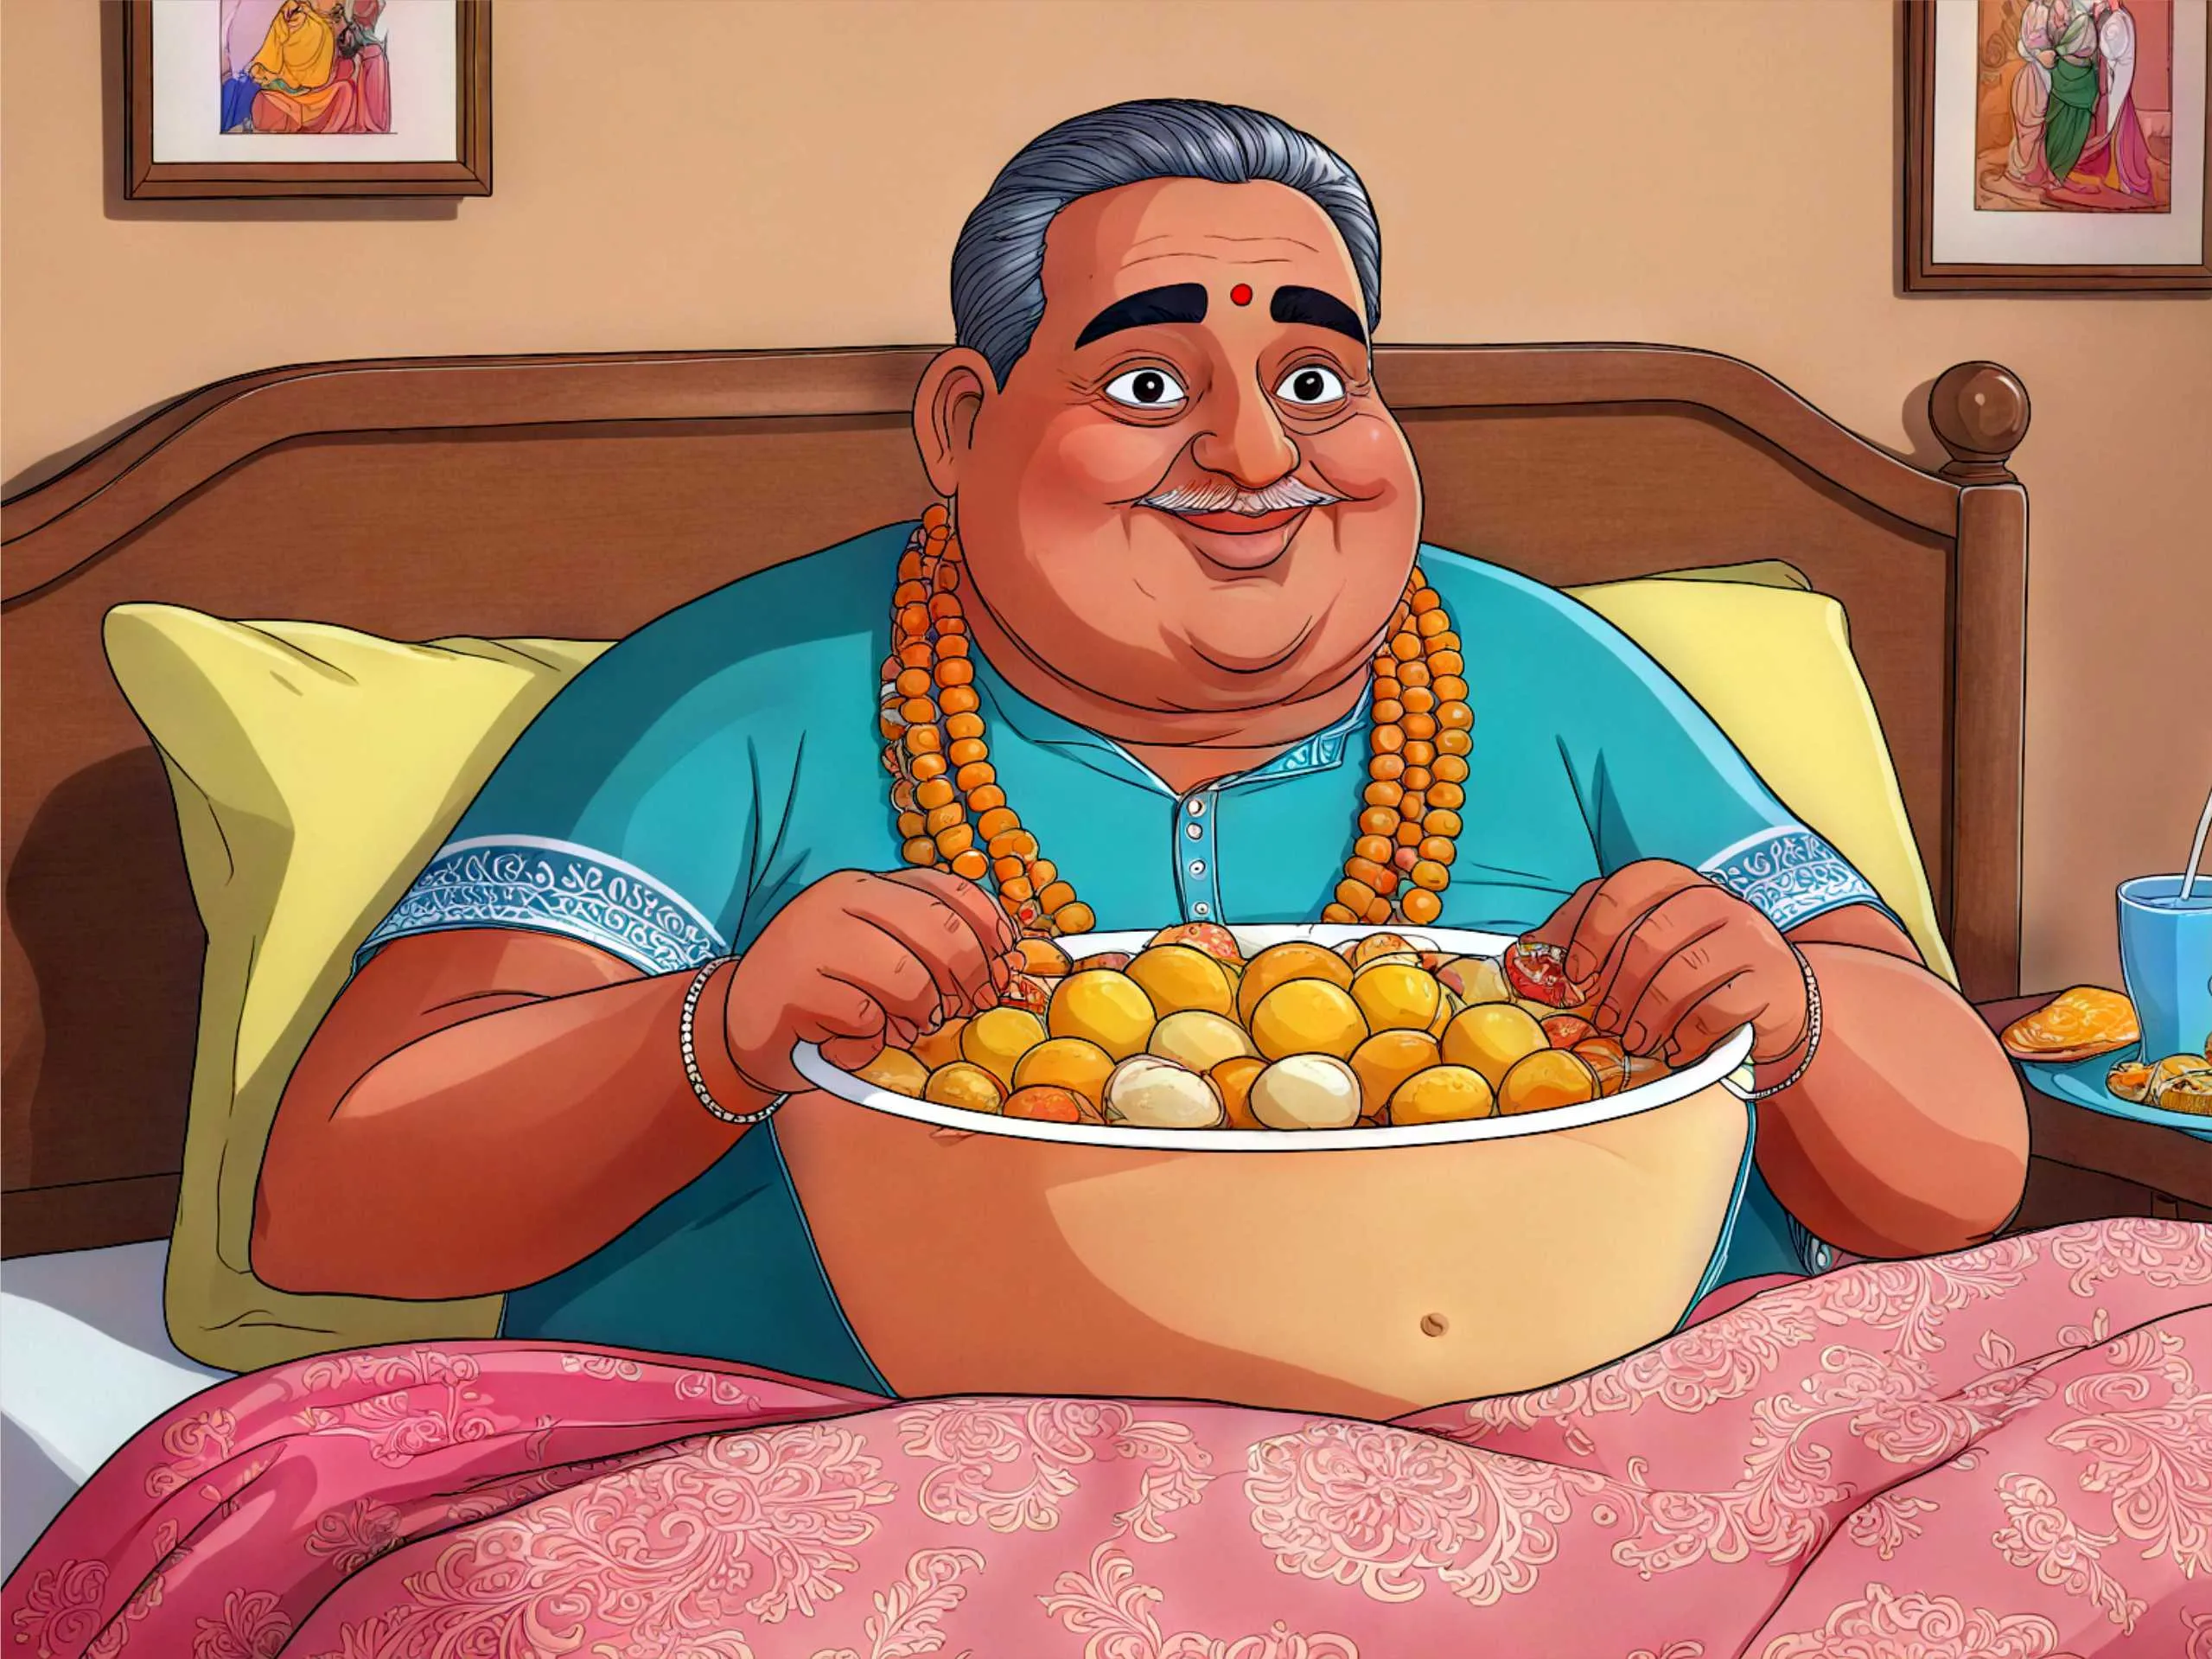 cartoon image of fat man lying on bed